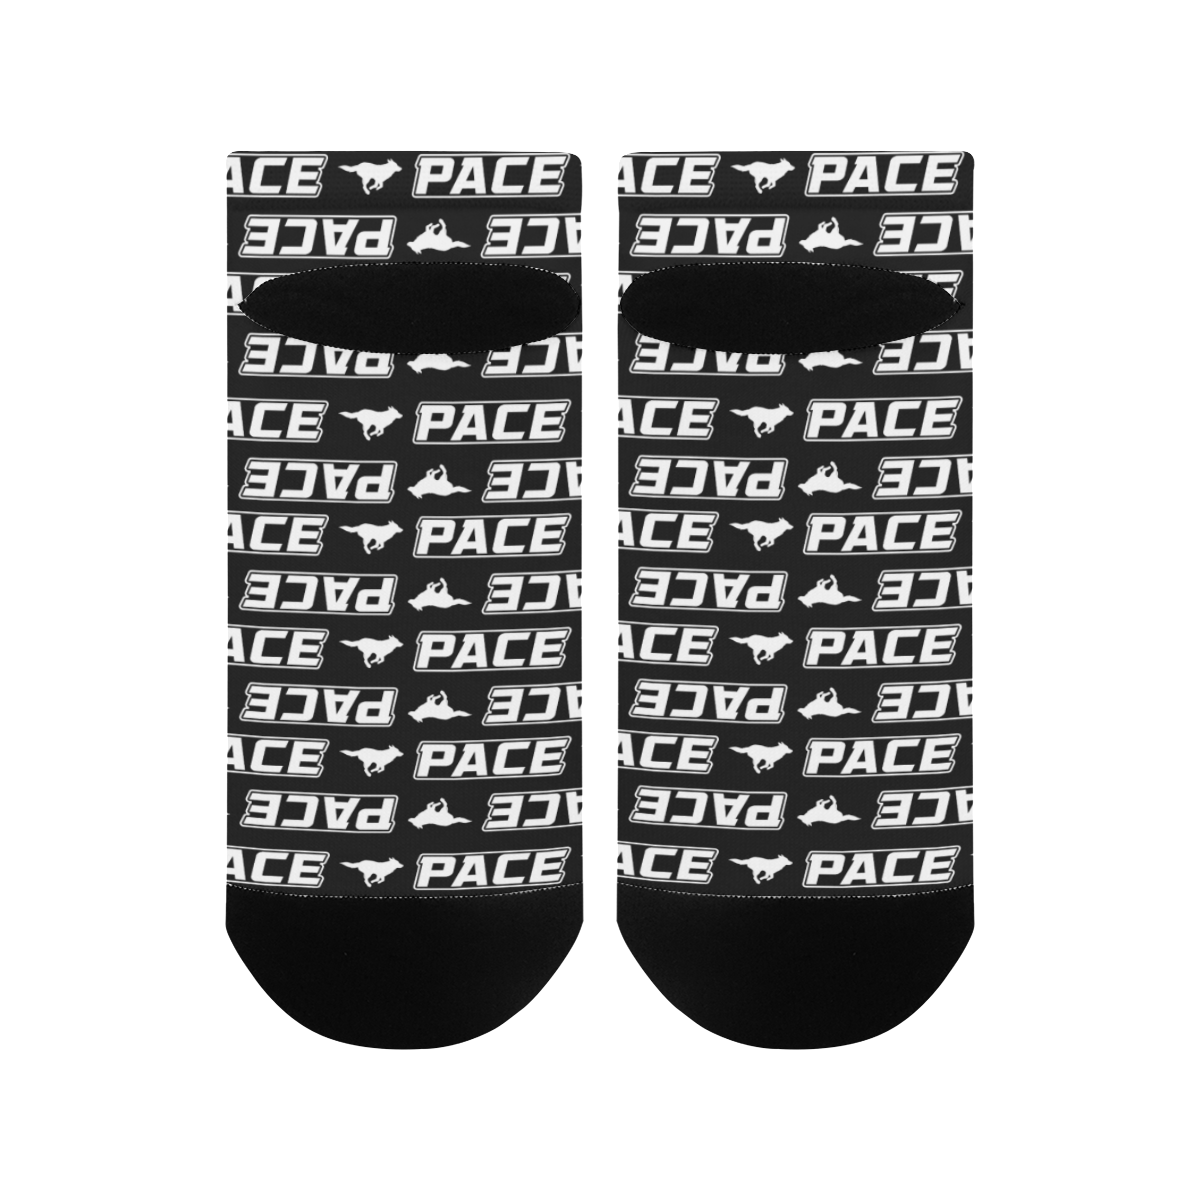 Pace pattern socks Men's Ankle Socks